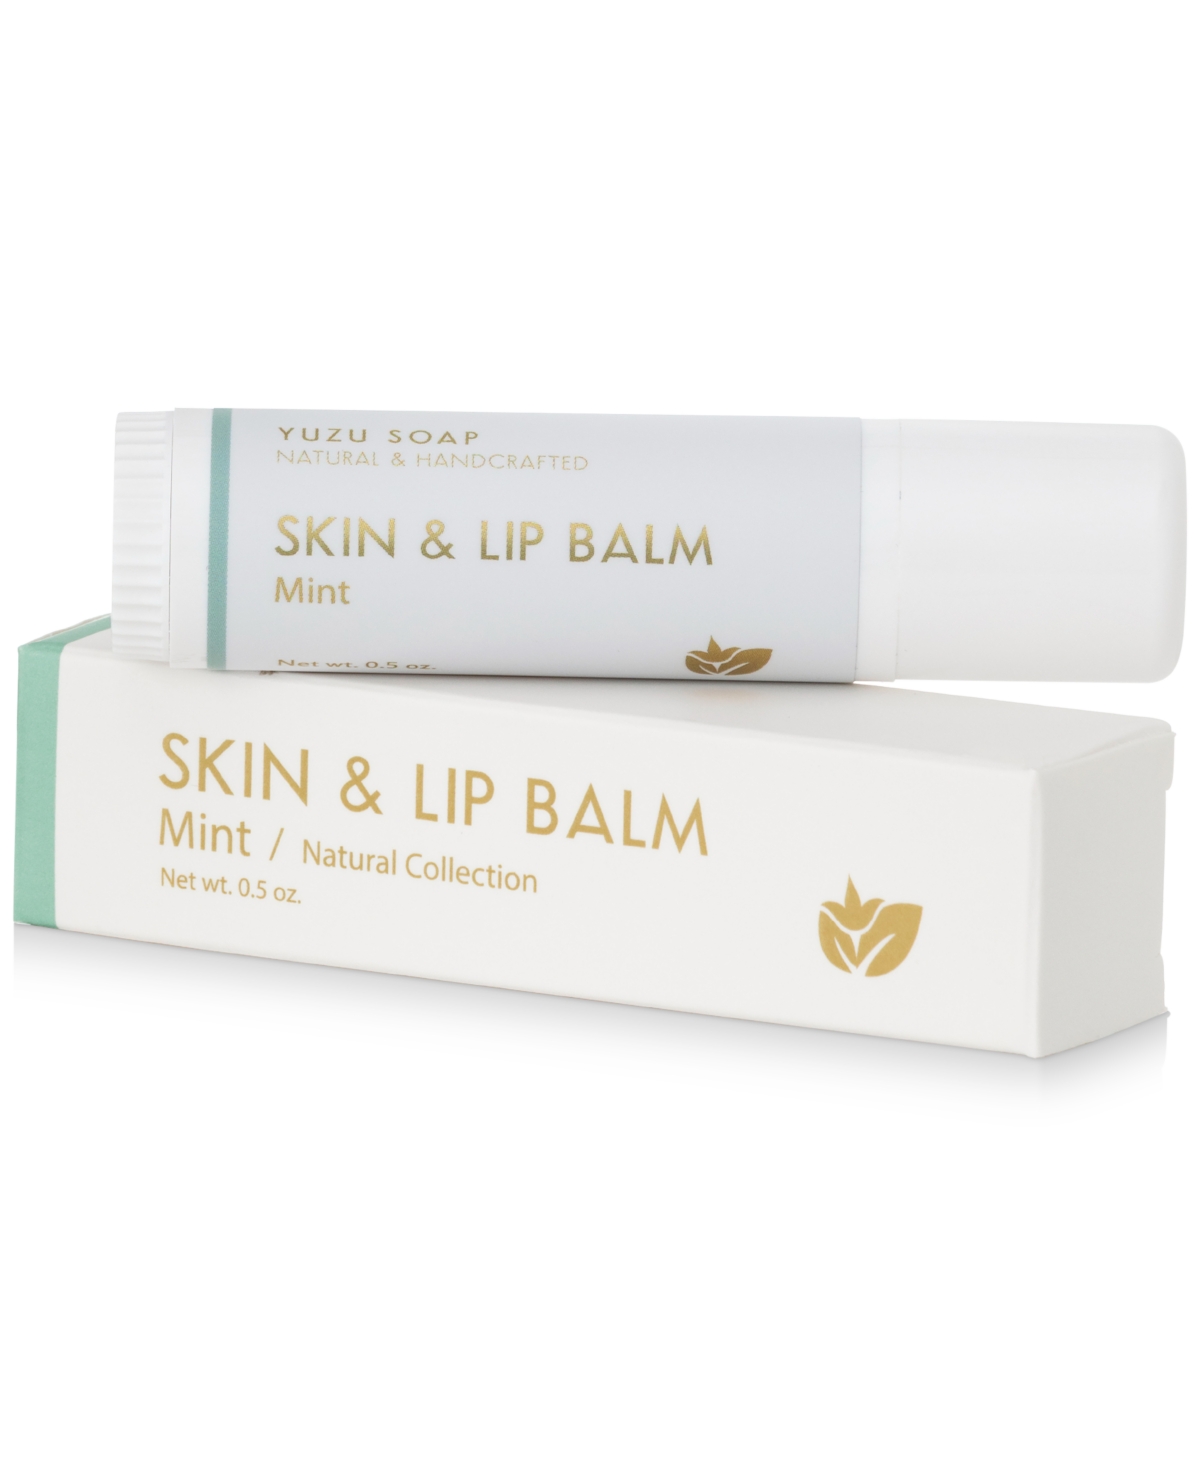 Skin & Lip Balm - Mint, 0.5-oz.